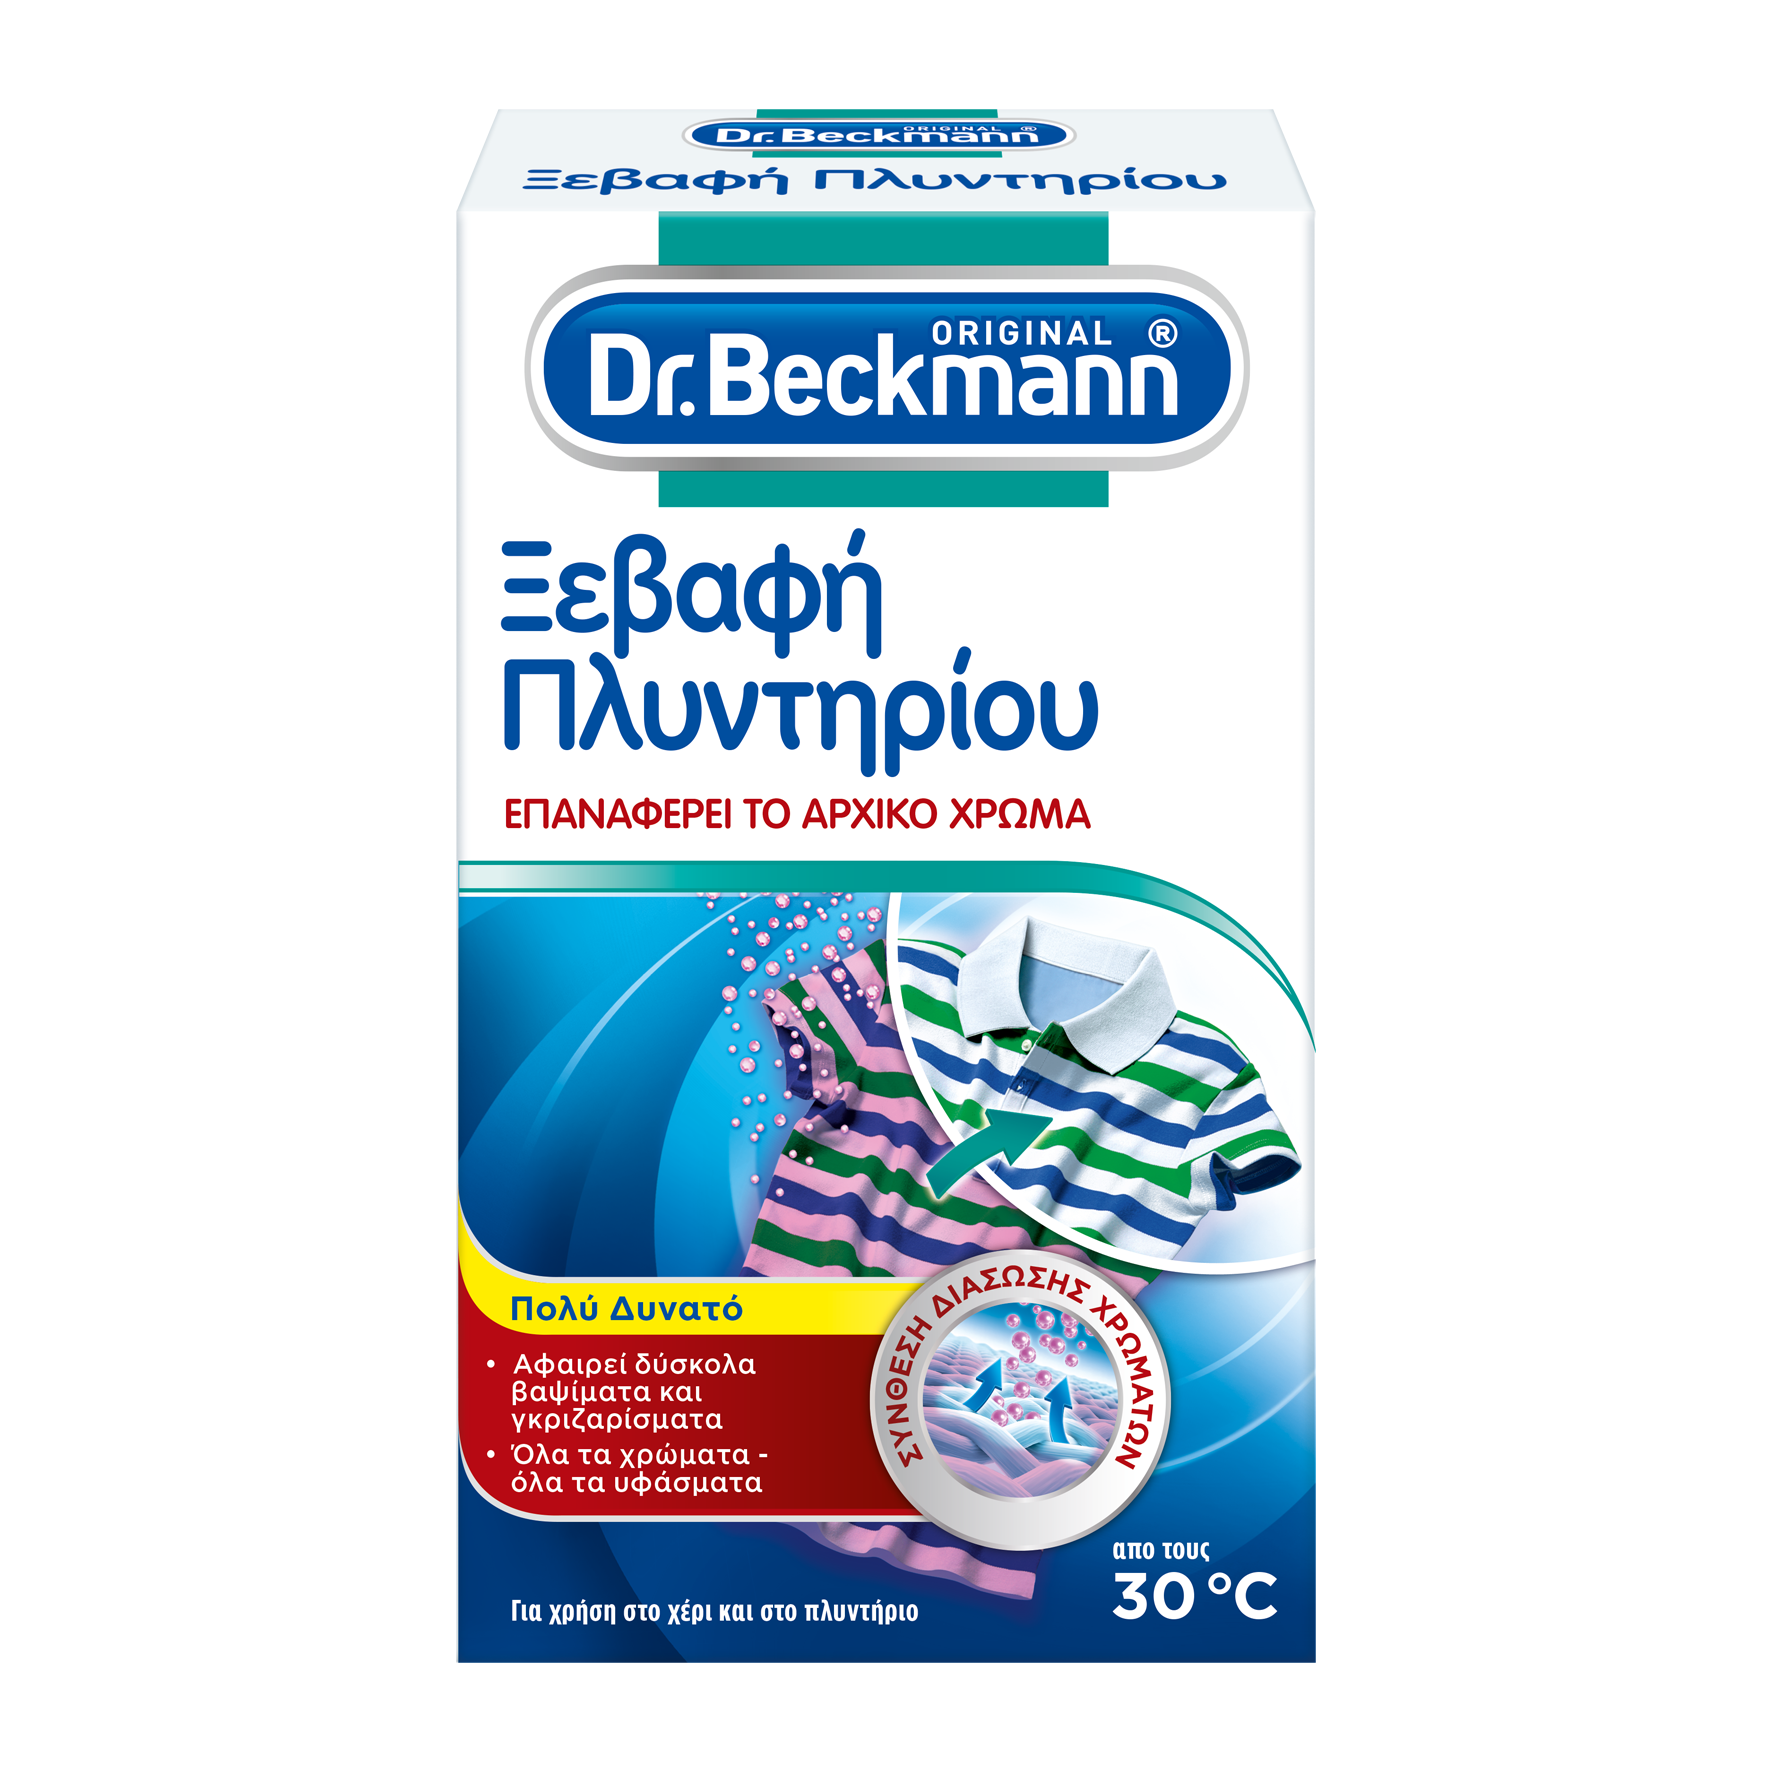 Tage en risiko scaring fejl Intensive Decolourant Dr. Beckmann (150 g) | e-Fresh.gr